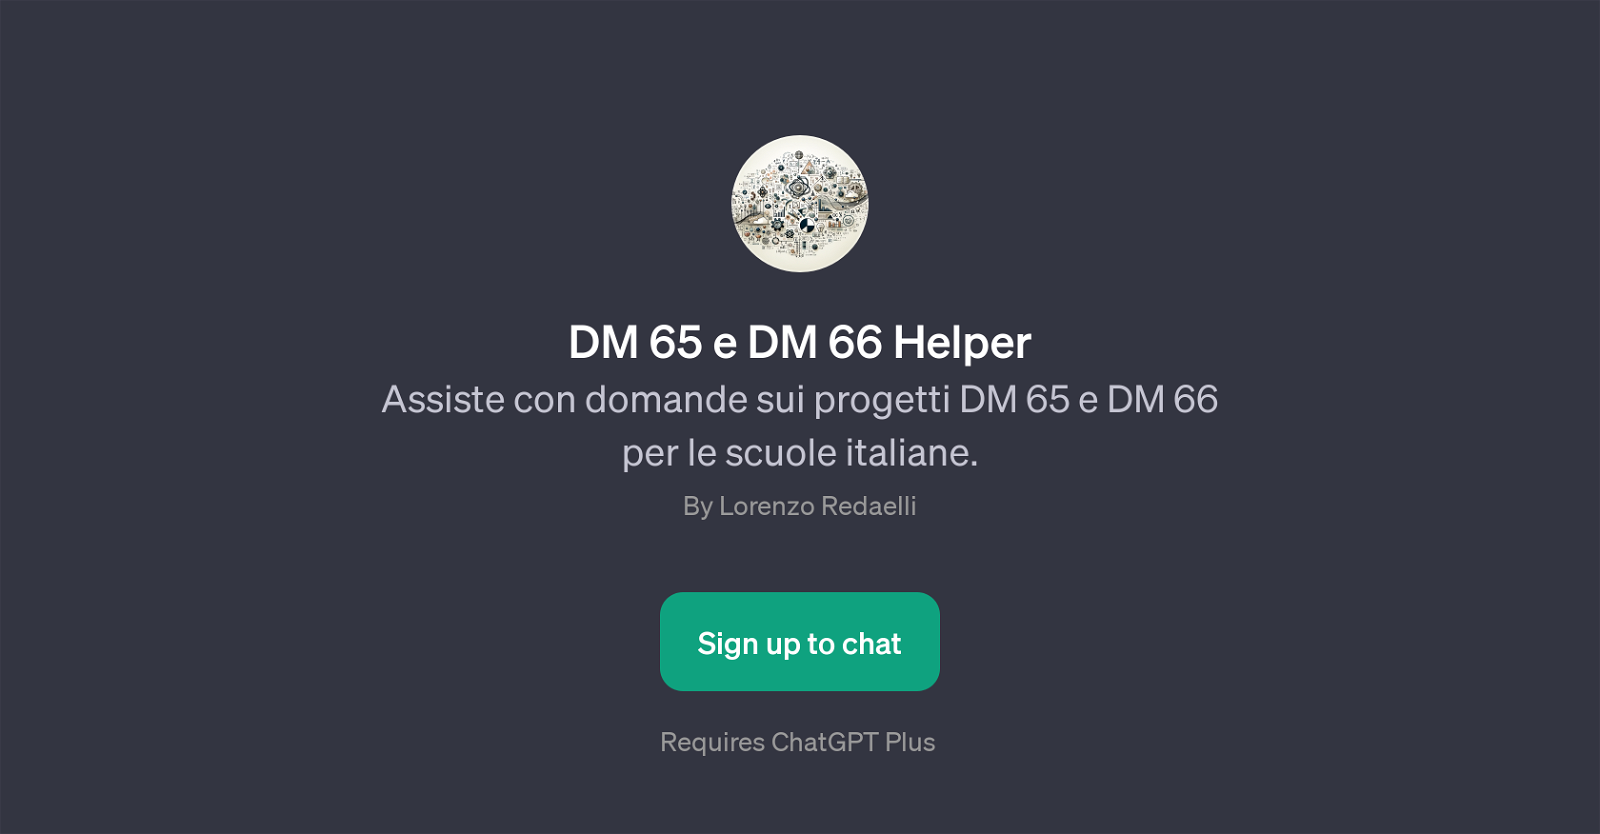 DM 65 e DM 66 Helper website